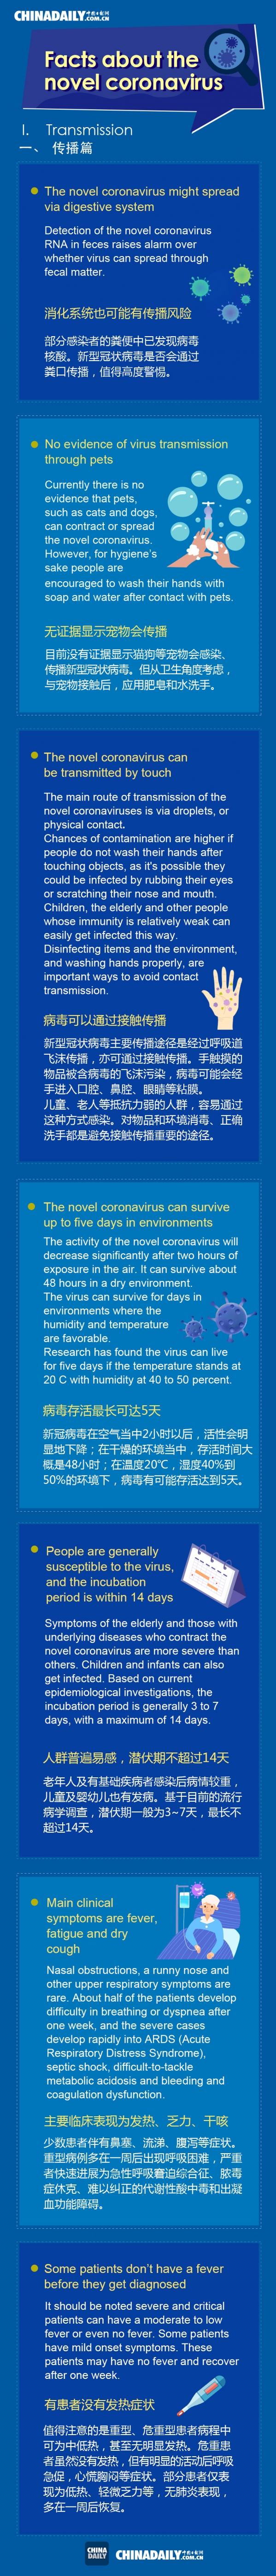 Facts about the novel coronavirus-Transmission.jpg